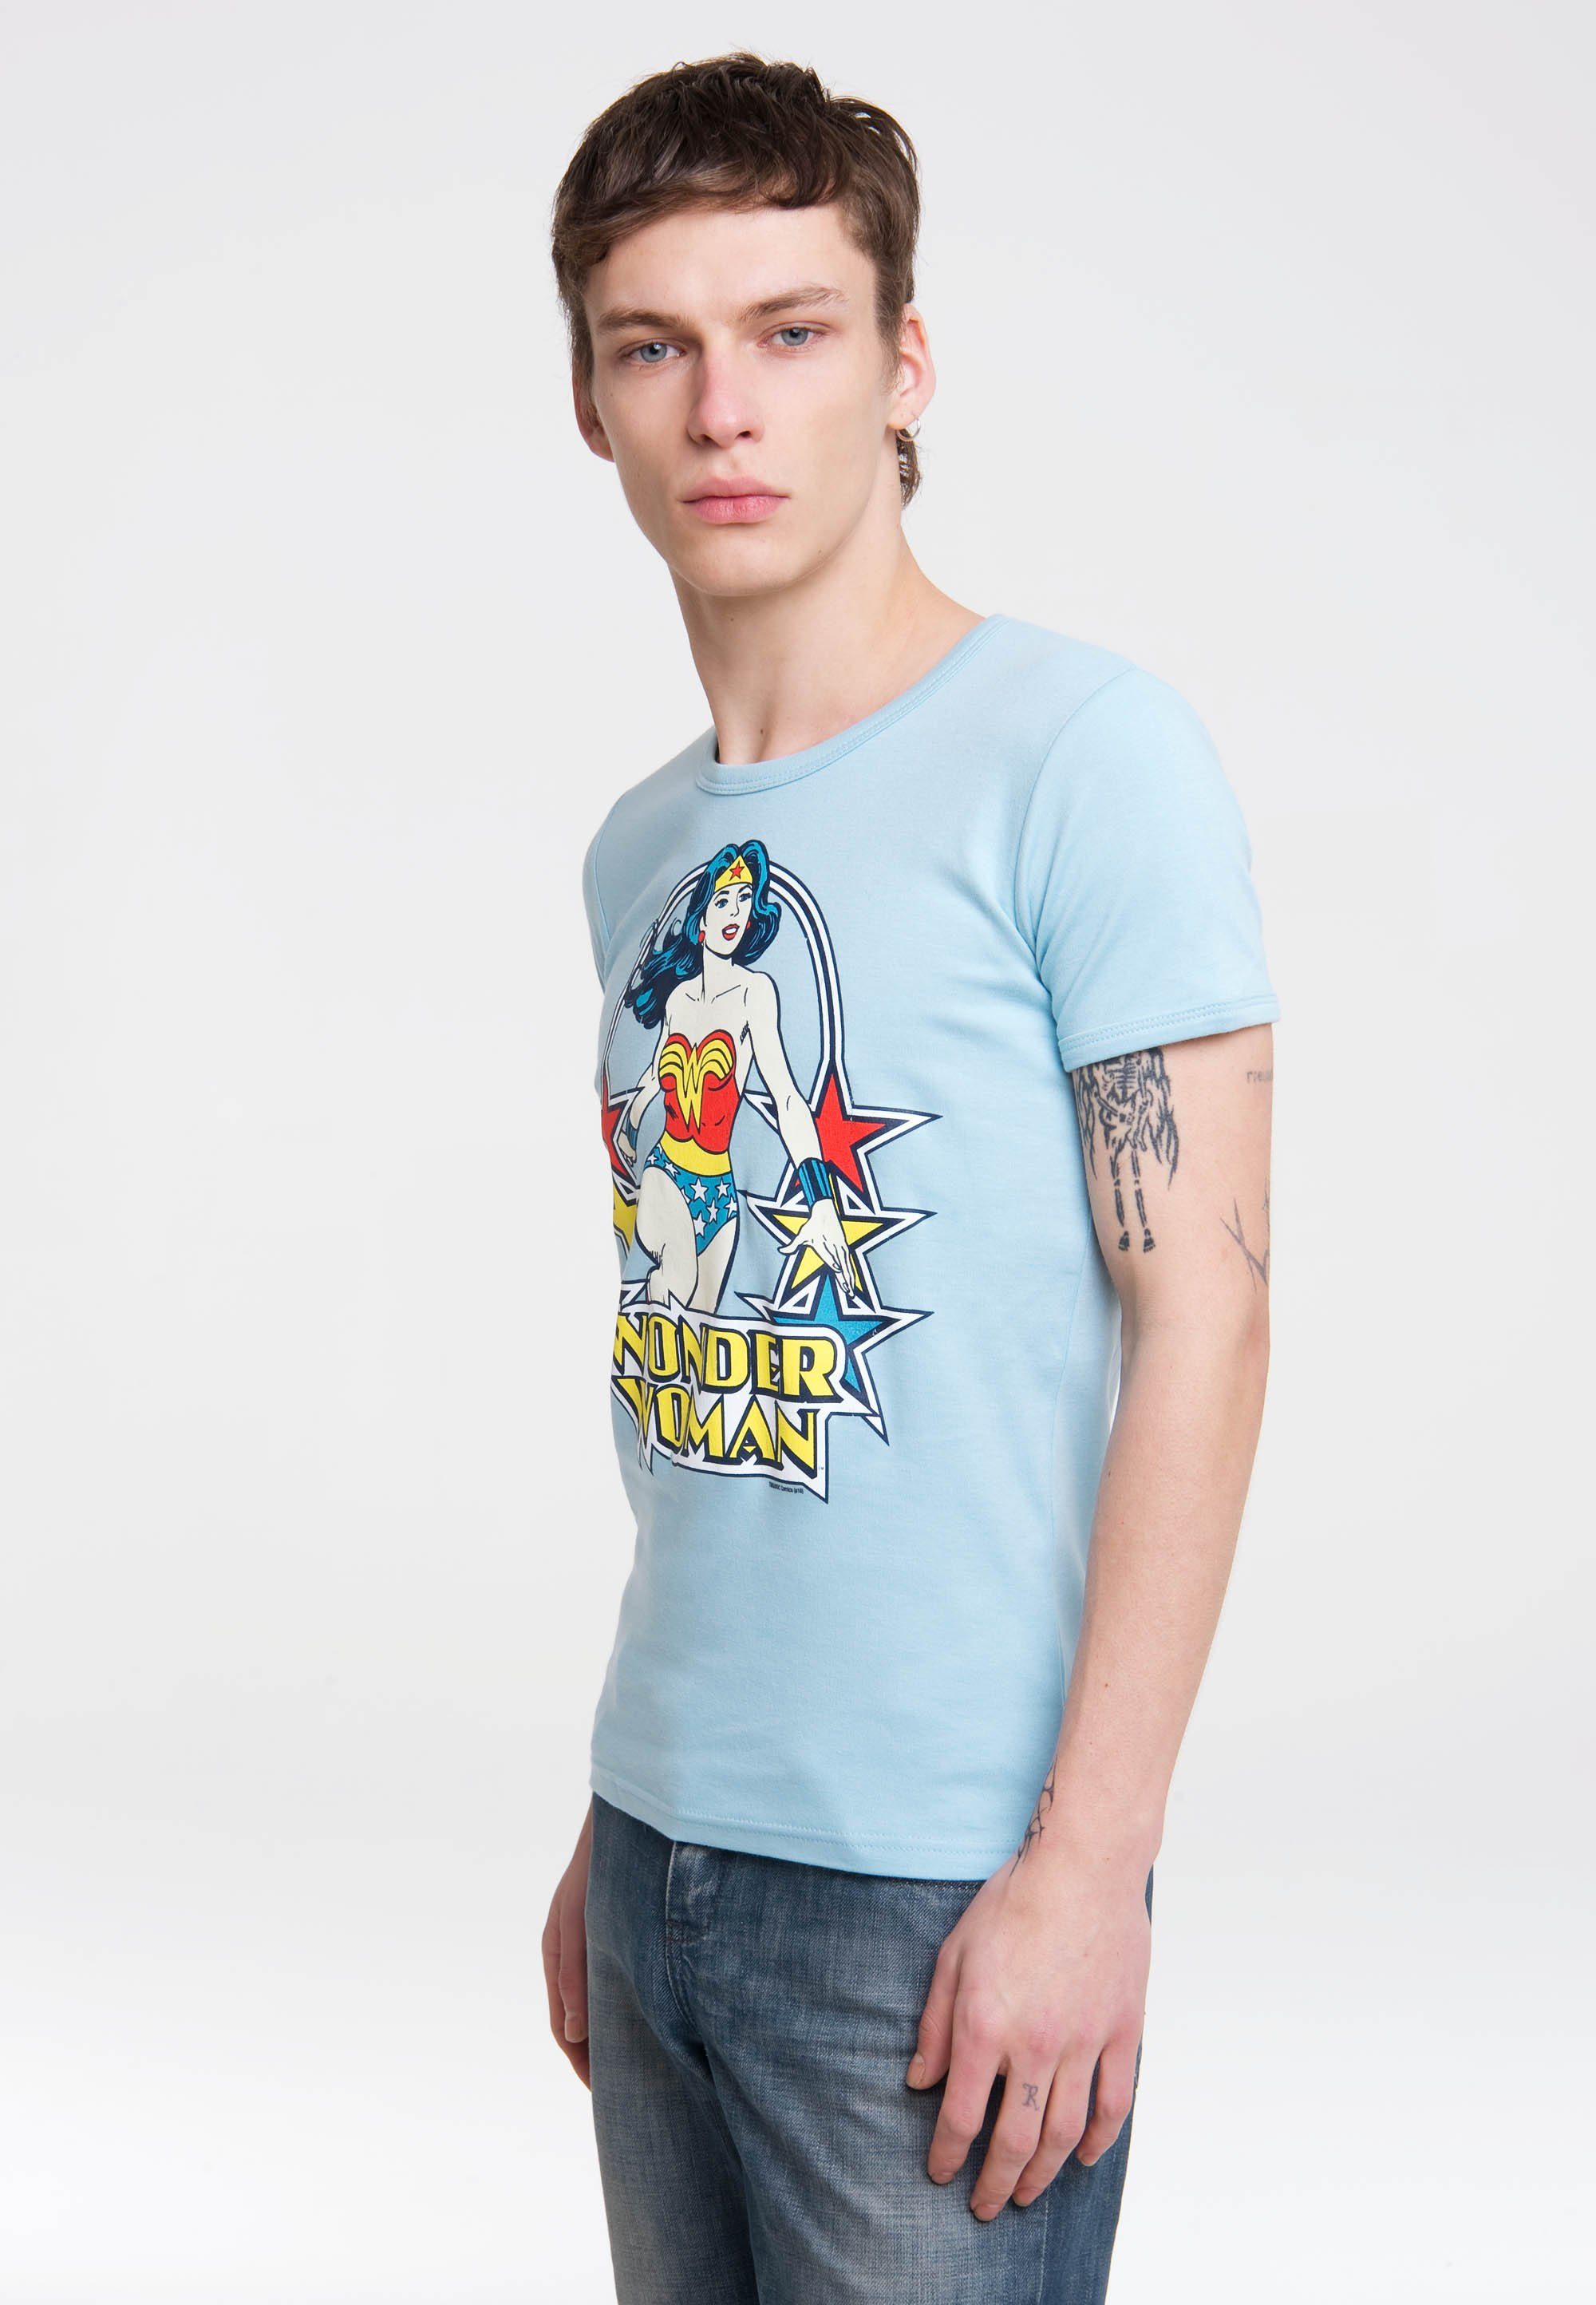 LOGOSHIRT T-Shirt Wonder Woman mit blau Retro-Print trendigem